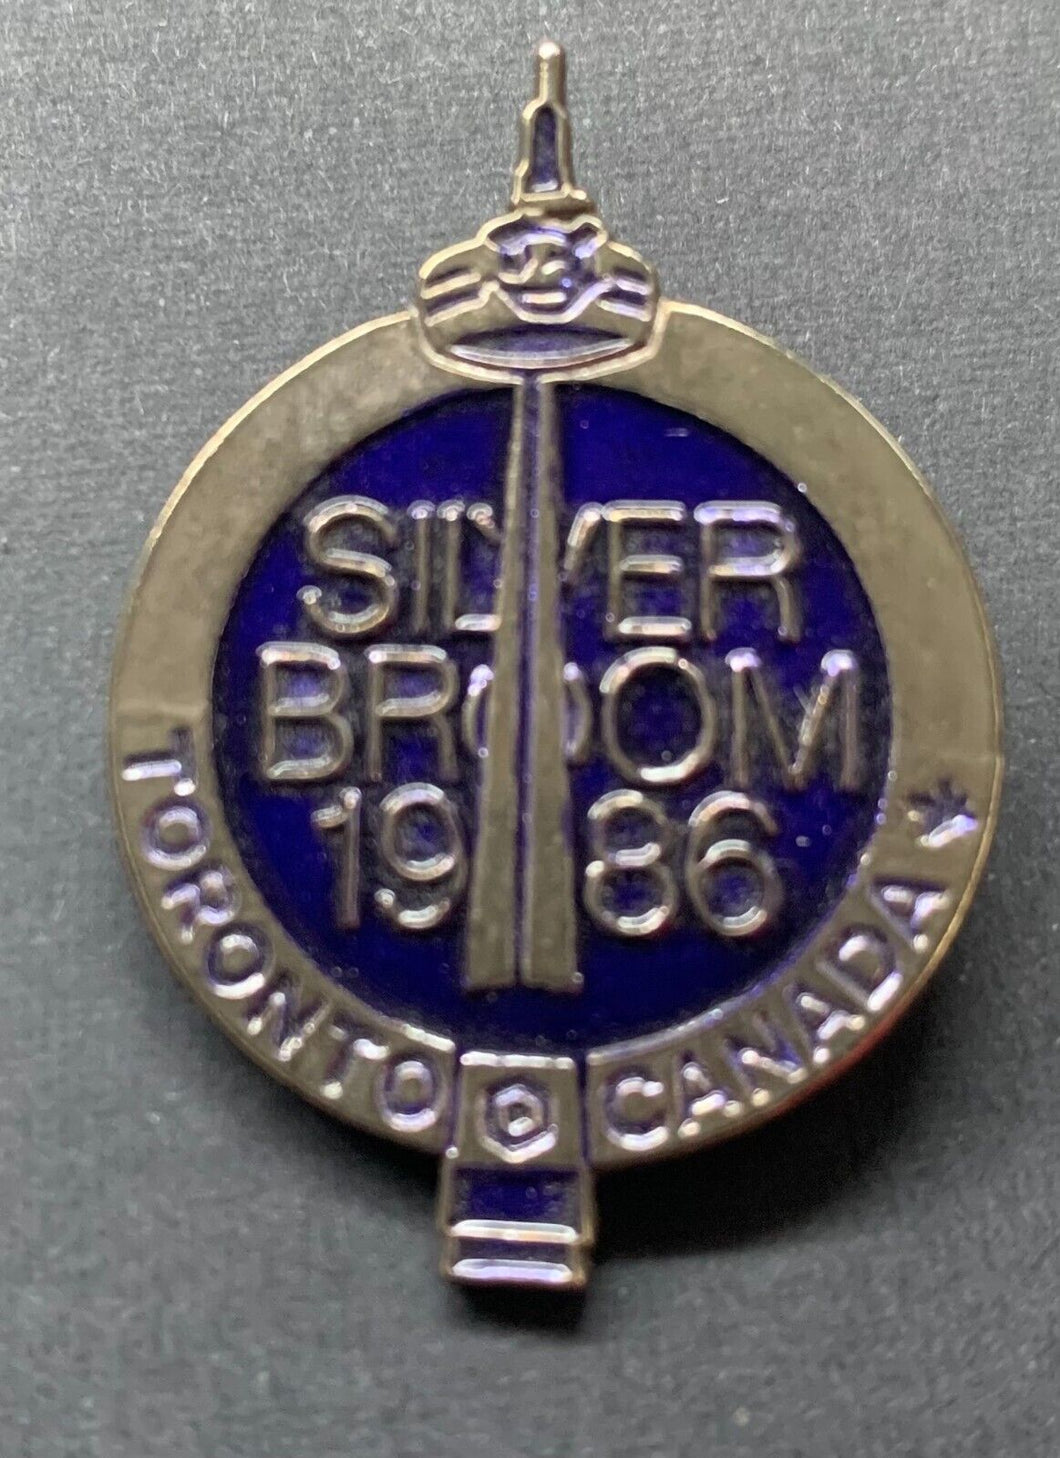 1986 World Curling Championship Silver Broom Toronto Pinback Sports Vintage